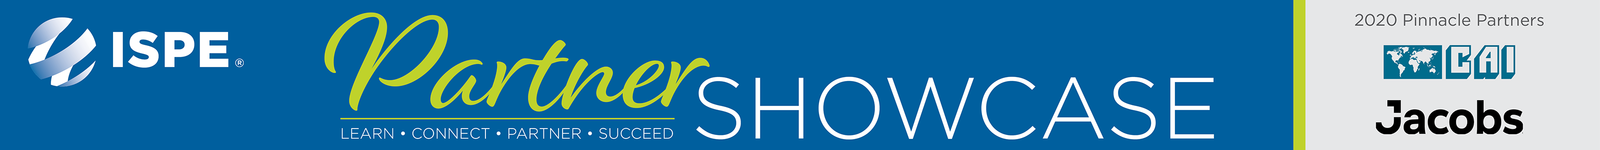 ISPE 2020 Partner Showcase logo